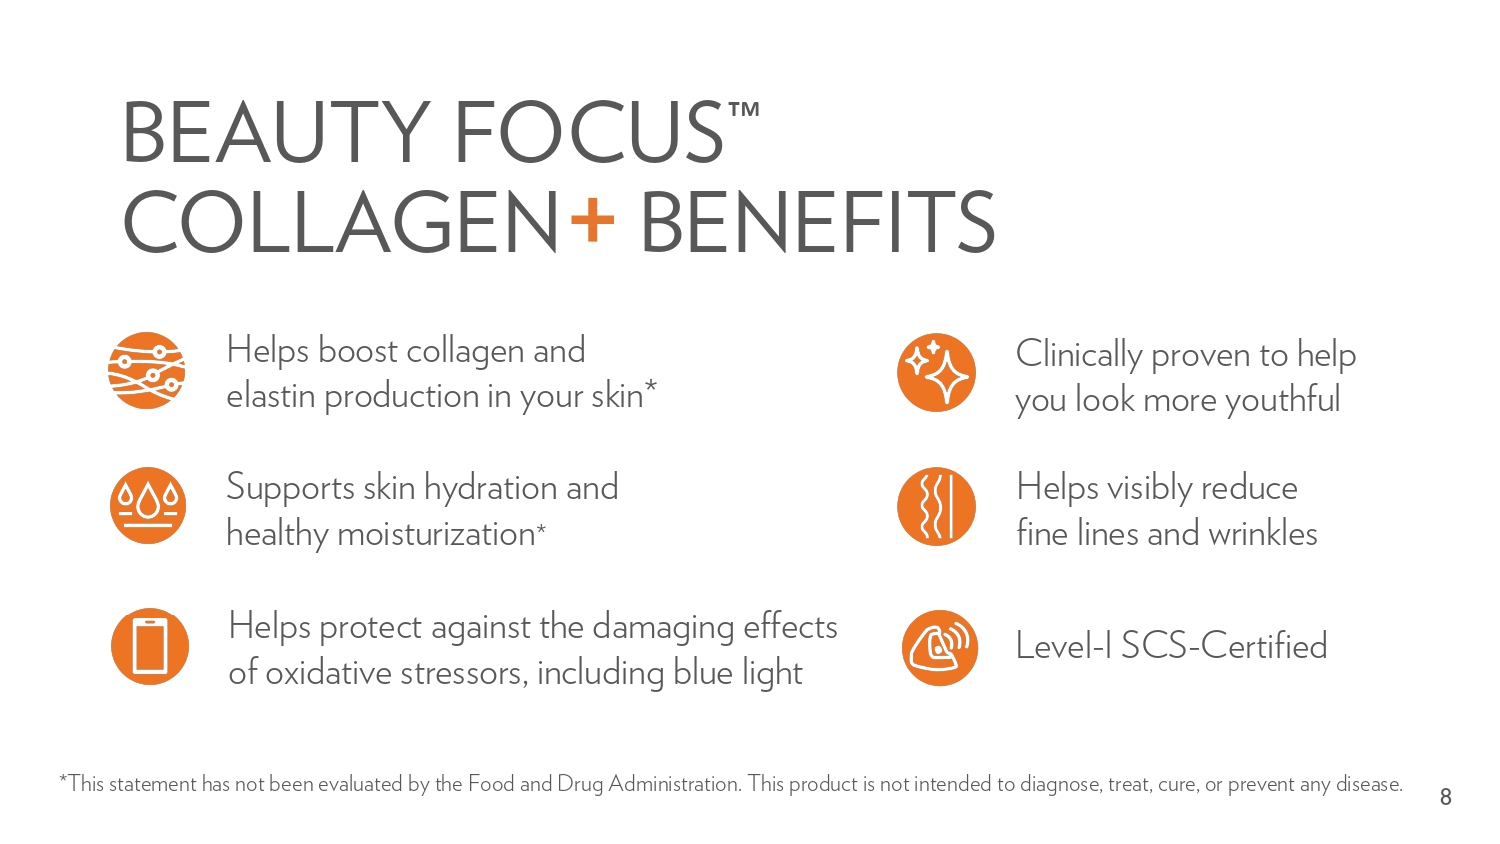 <Img src =”beauty focus collagen+.jpg” alt=“บิวตี้ โฟกัส คอลลาเจน+ 4”>